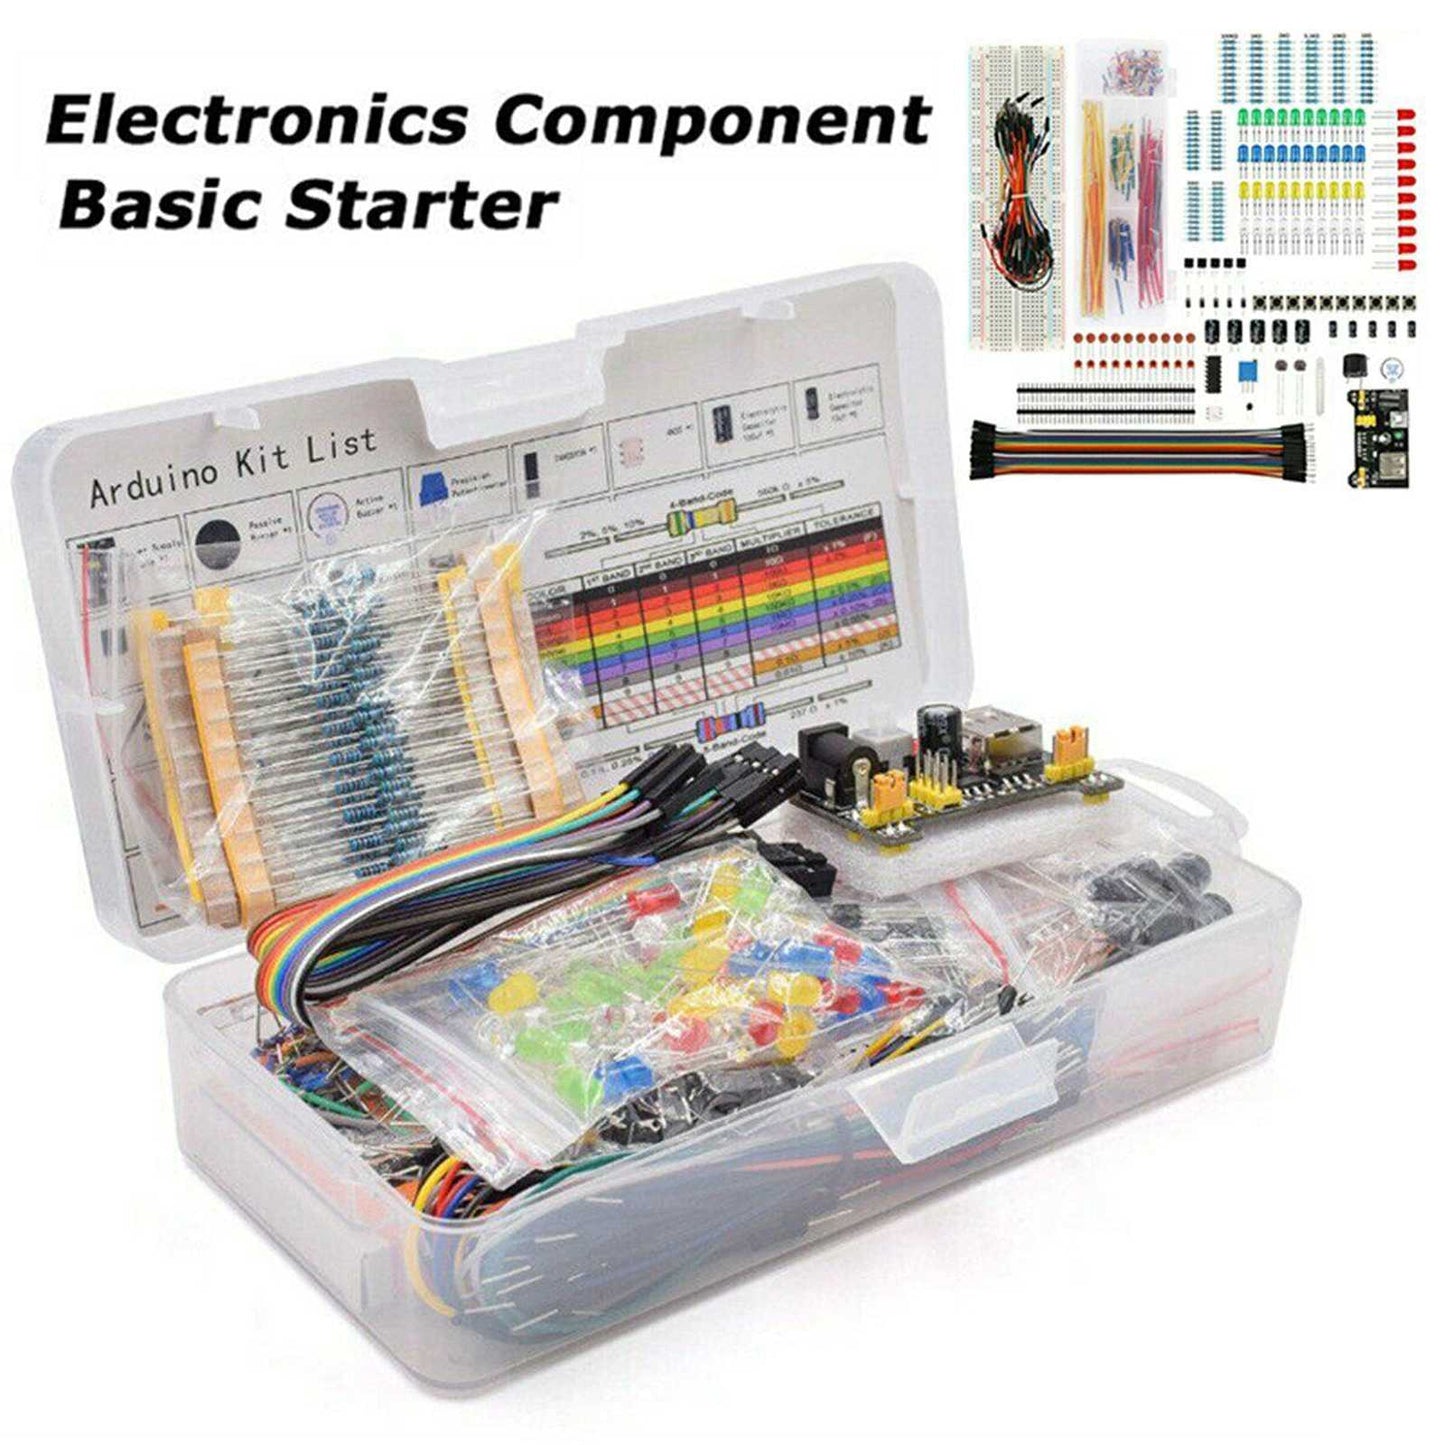 Ultimate Starter UNO R3 Kit Elektronik Projekt Baukasten Für Arduino Lernset